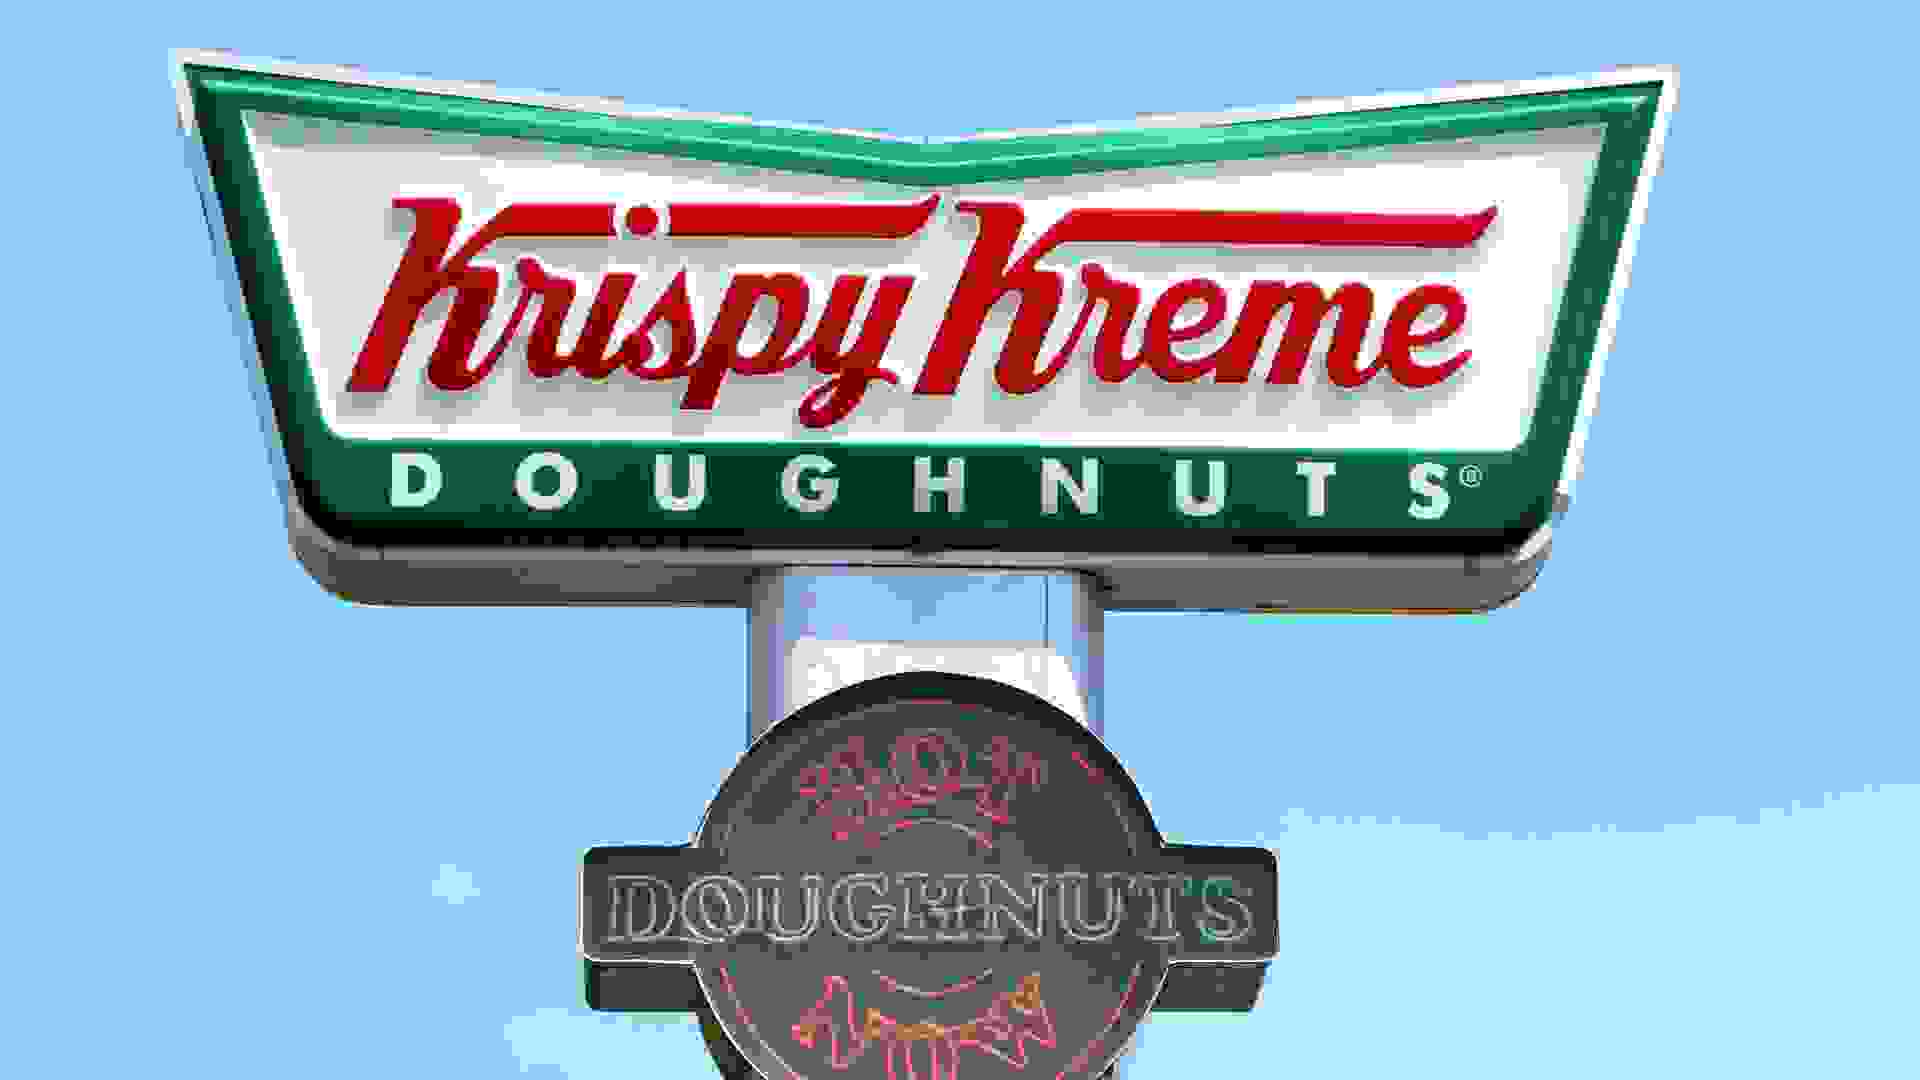 Krispy Kreme dougnuts